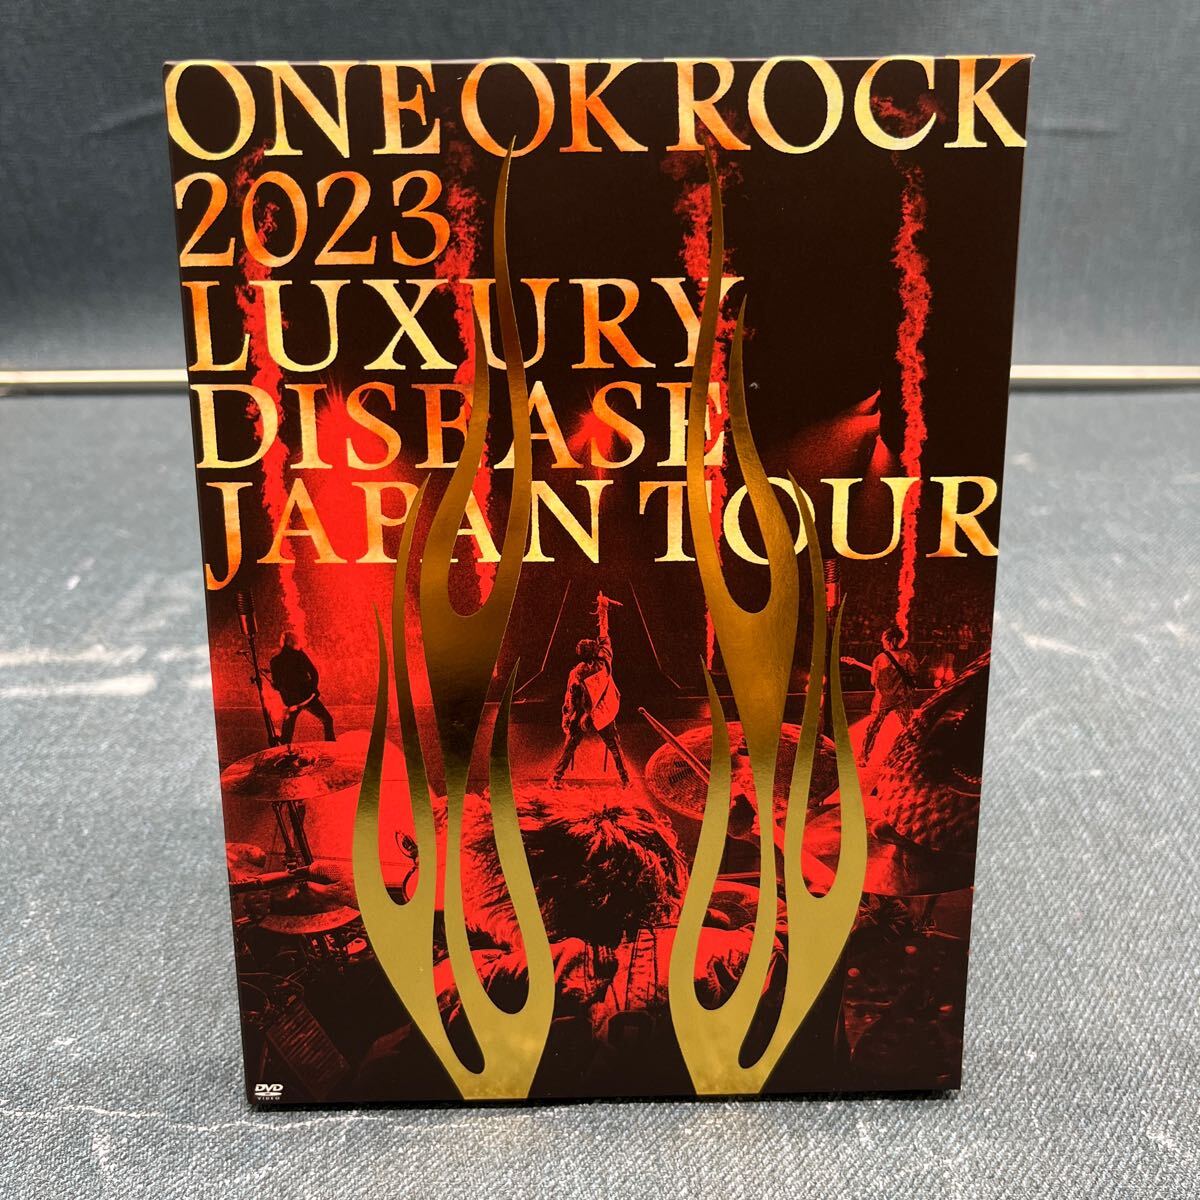 730 DVD ONE OK ROCK 2023 LUXURY DISEASE JAPAN TOUR ワンオクの画像1